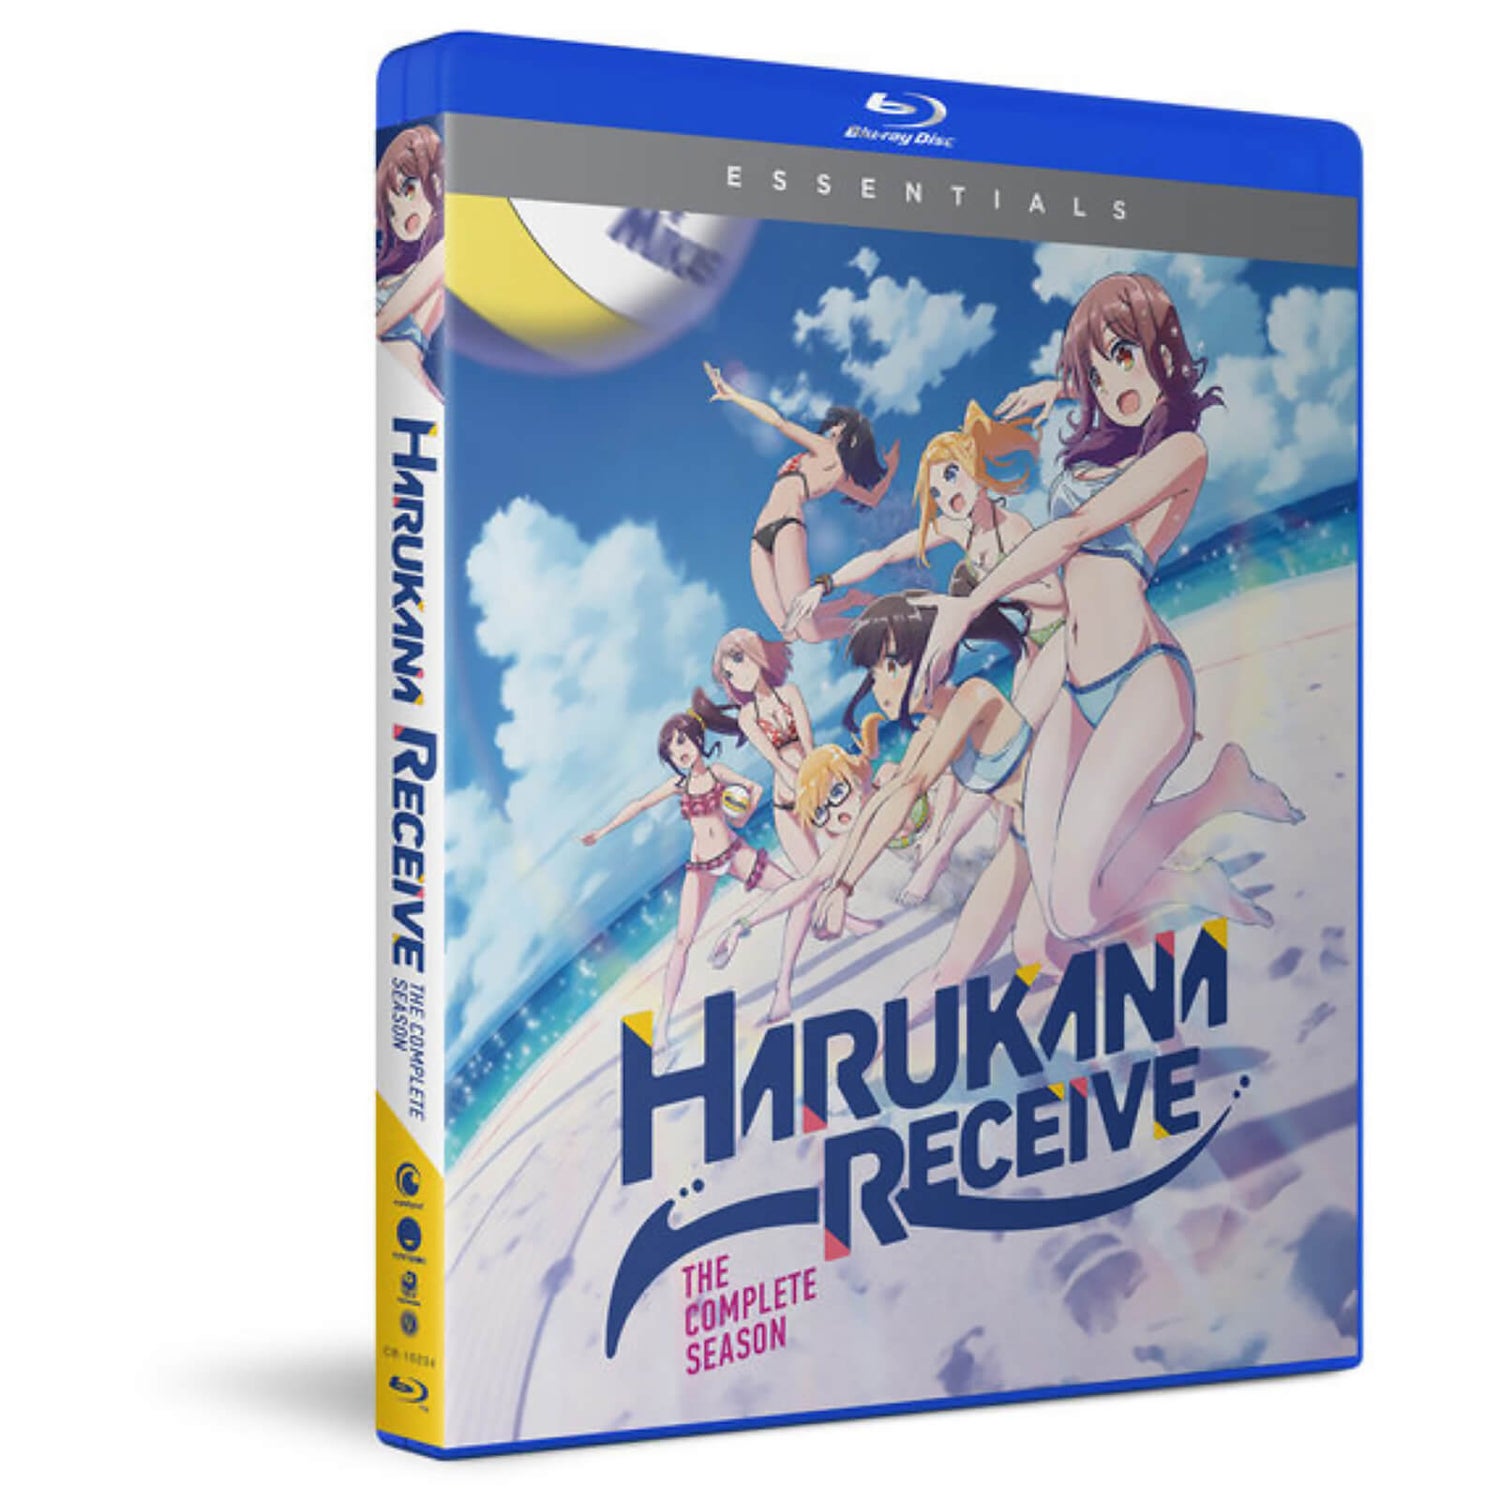 Harukana Receive: The Complete Season (Essentials)